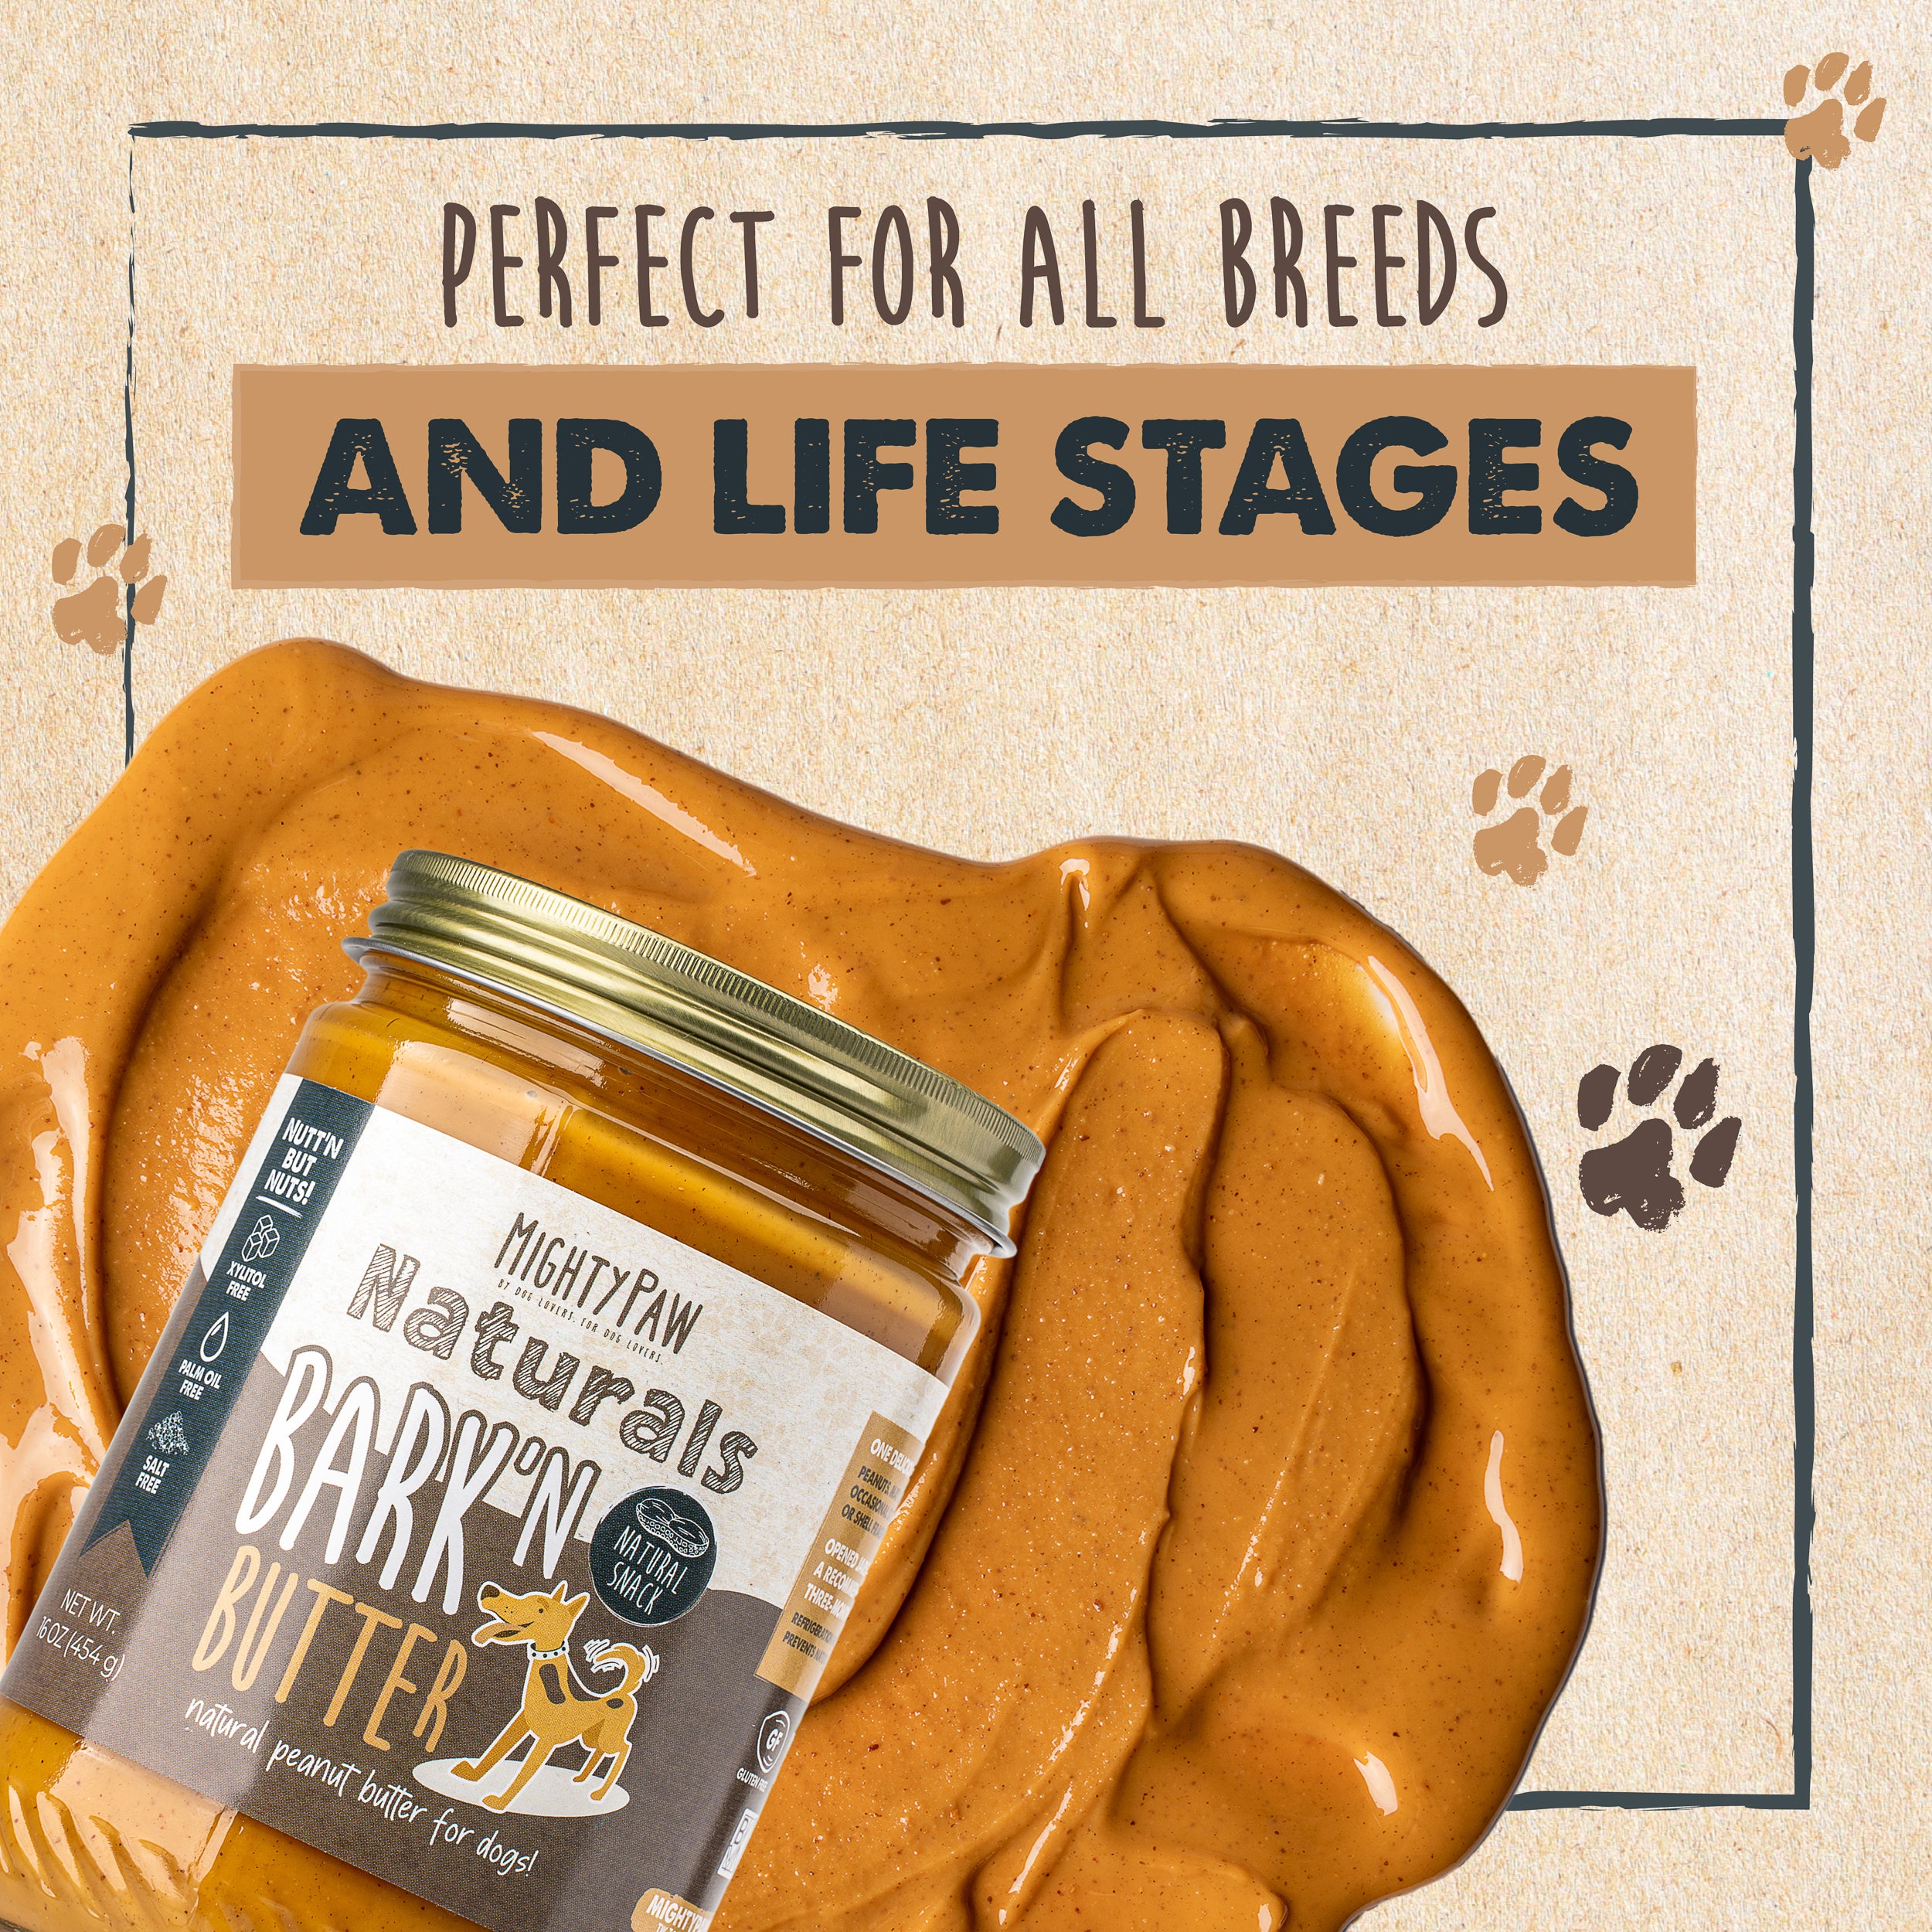 Bark'n Butter: Premium Peanut Butter Treats for Dogs